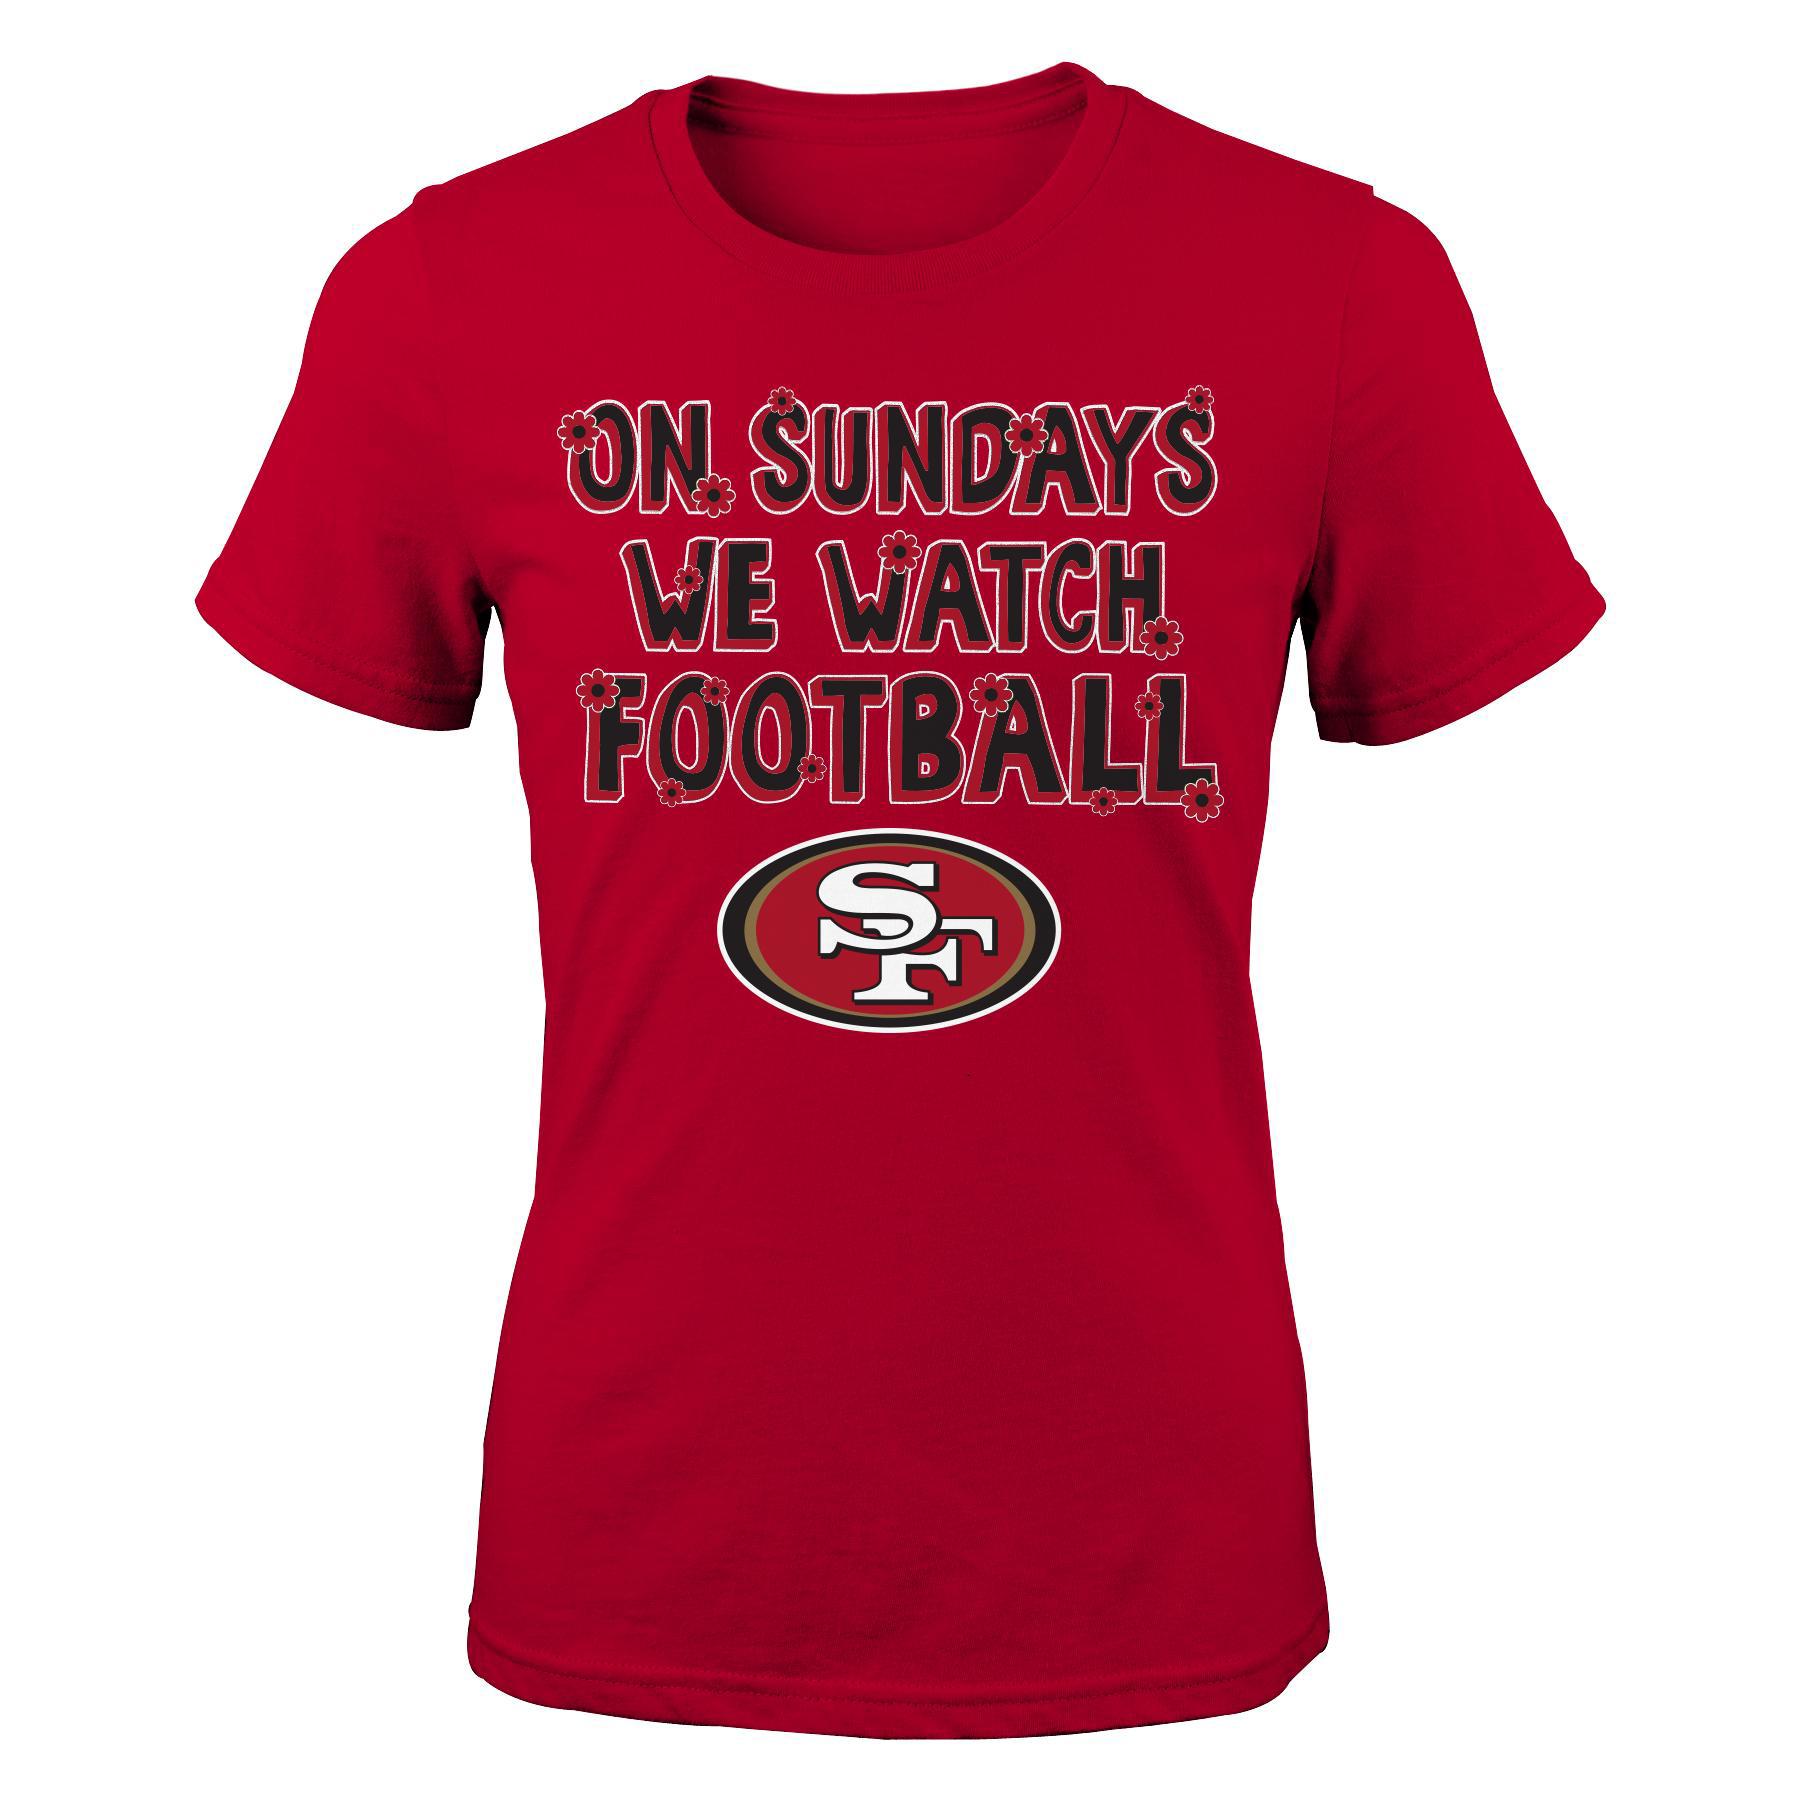 NFL Girls' T-Shirt - San Francisco 49ers